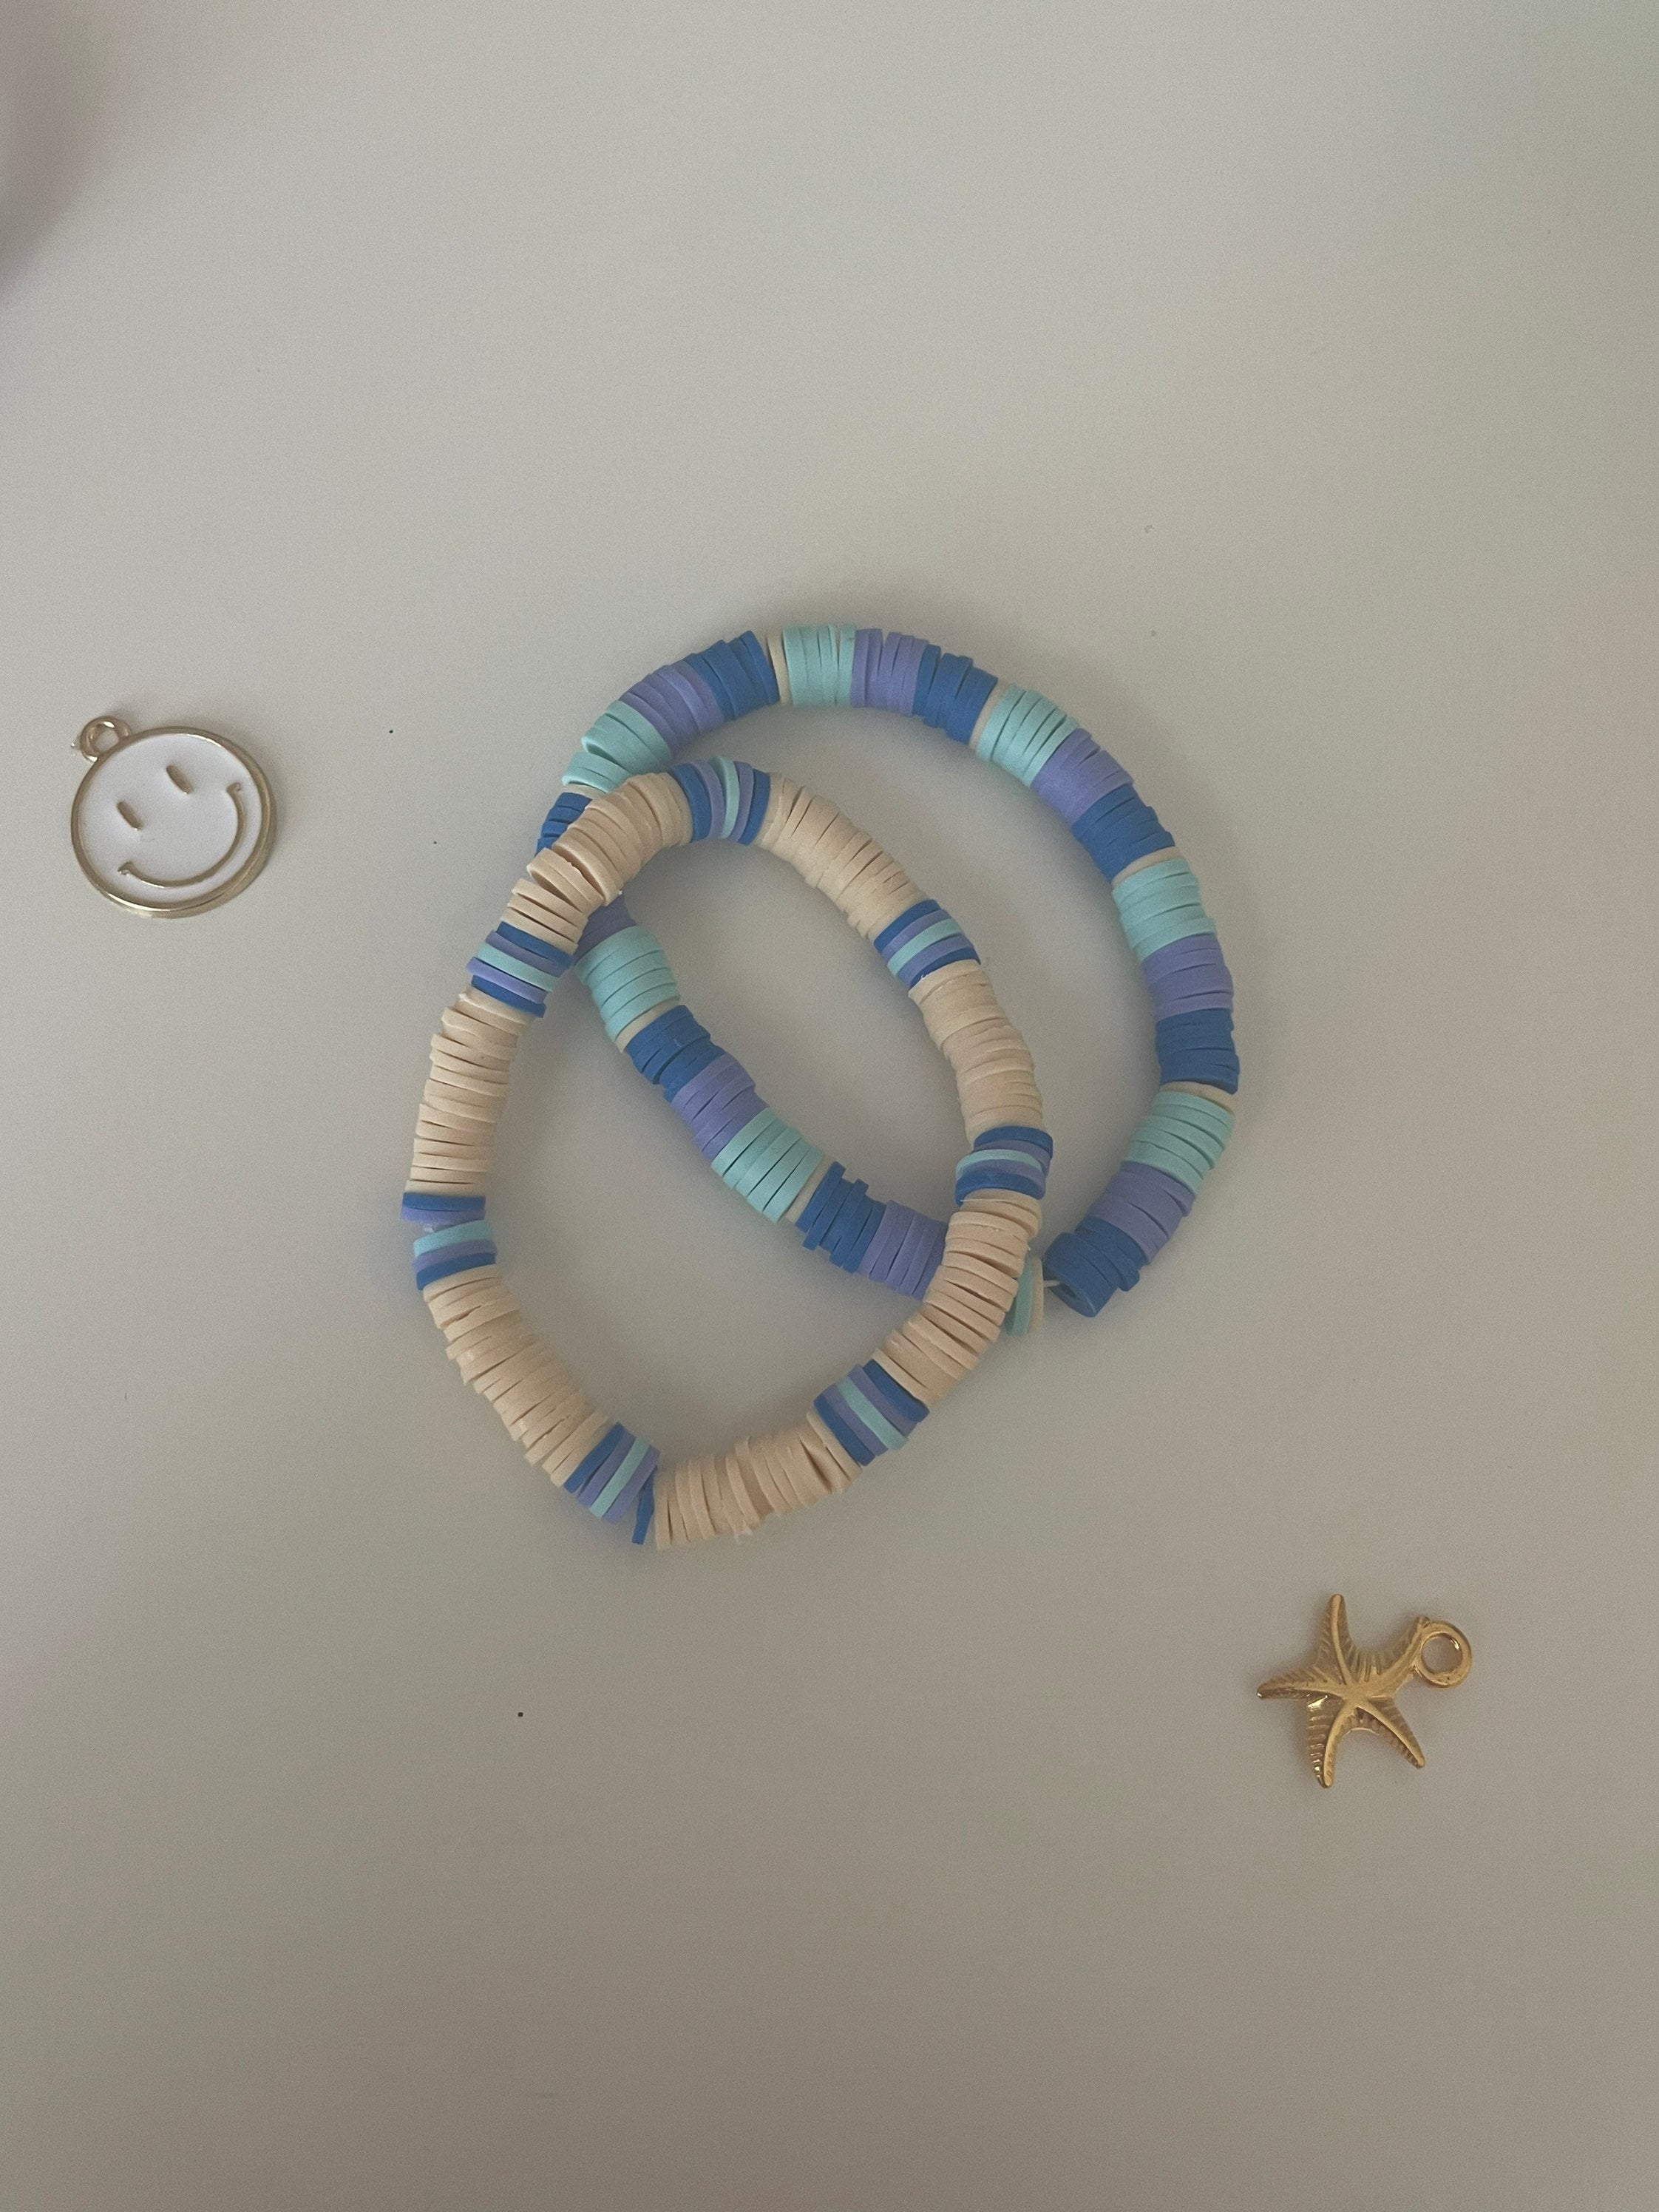 Starry Night Clay Bead Bracelet 